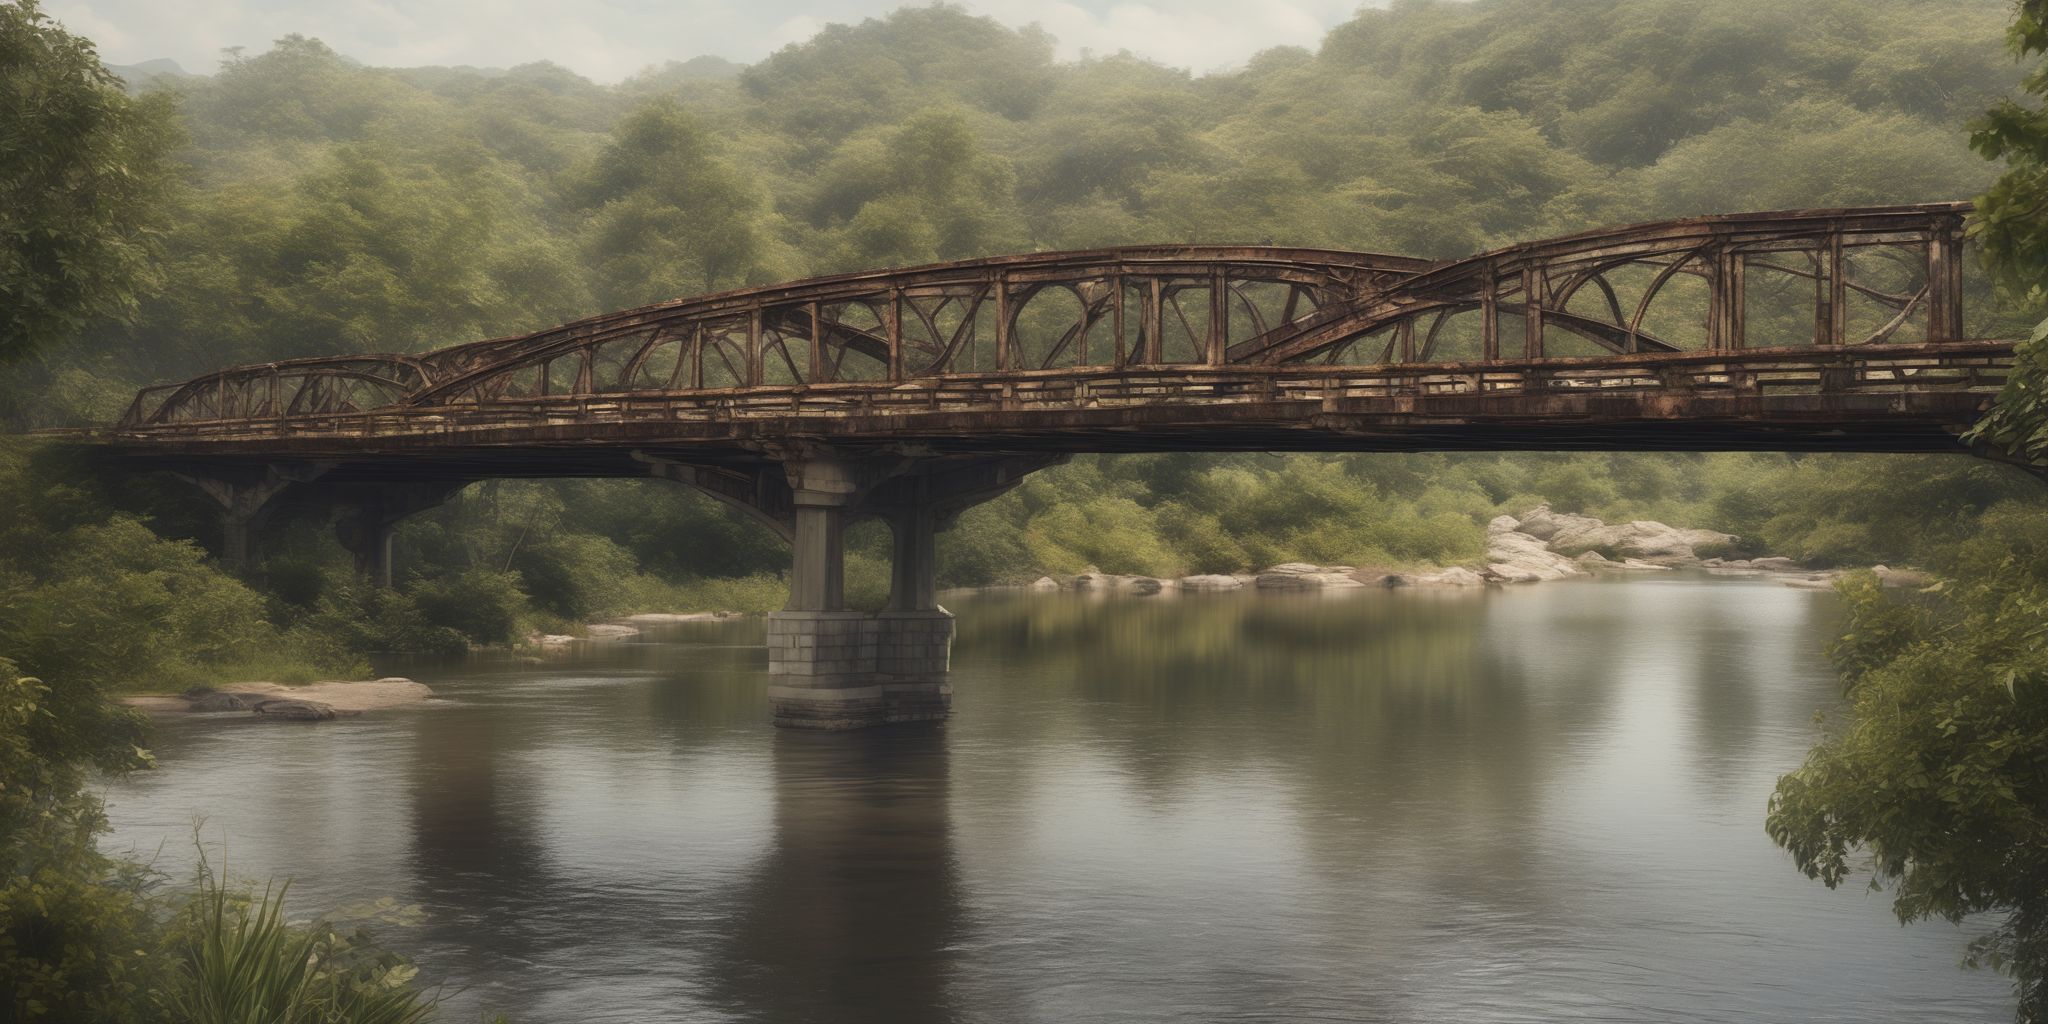 Loan bridge  in realistic, photographic style